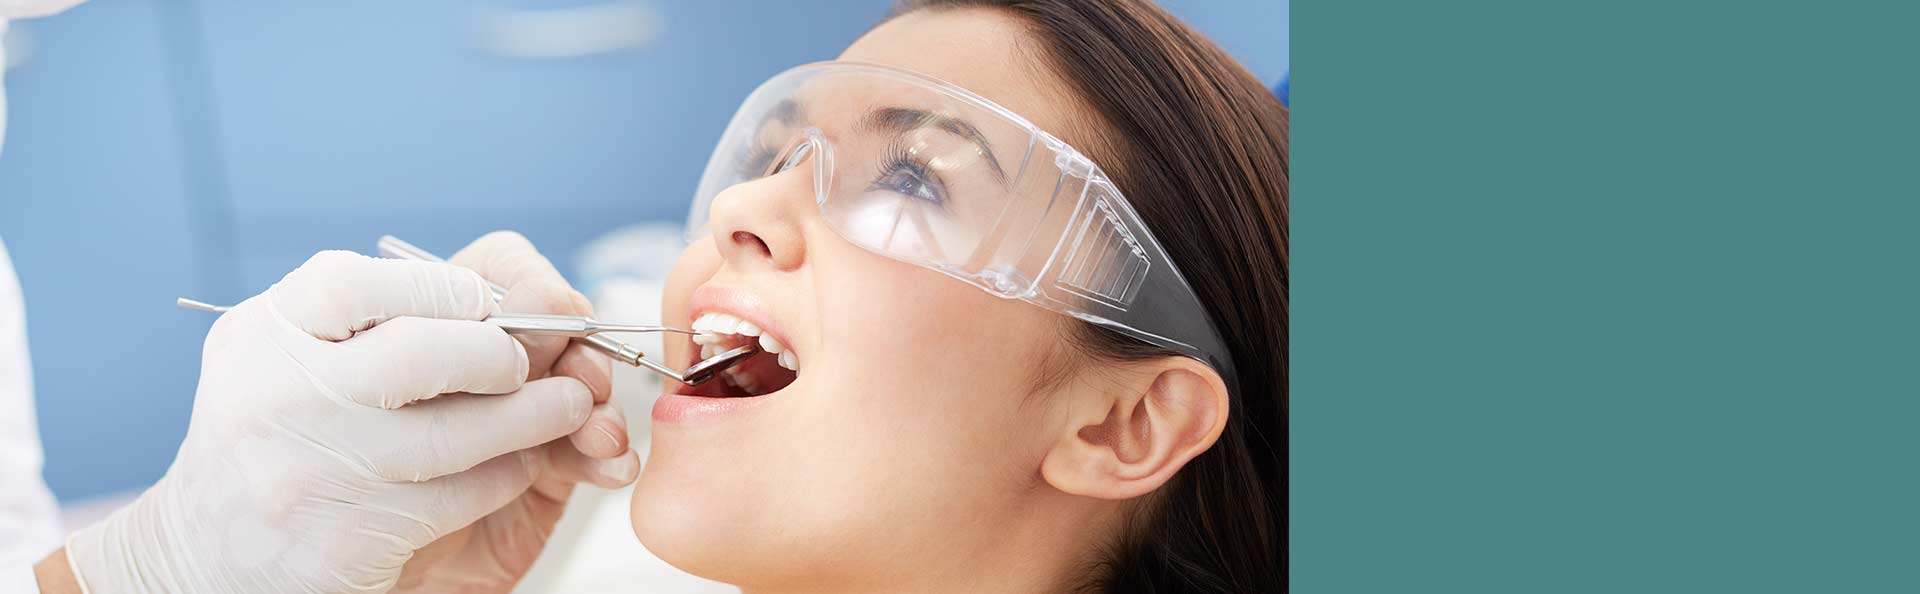 Corinthia Dental Clinic | Leduc Dentist | Teeth Cleanings